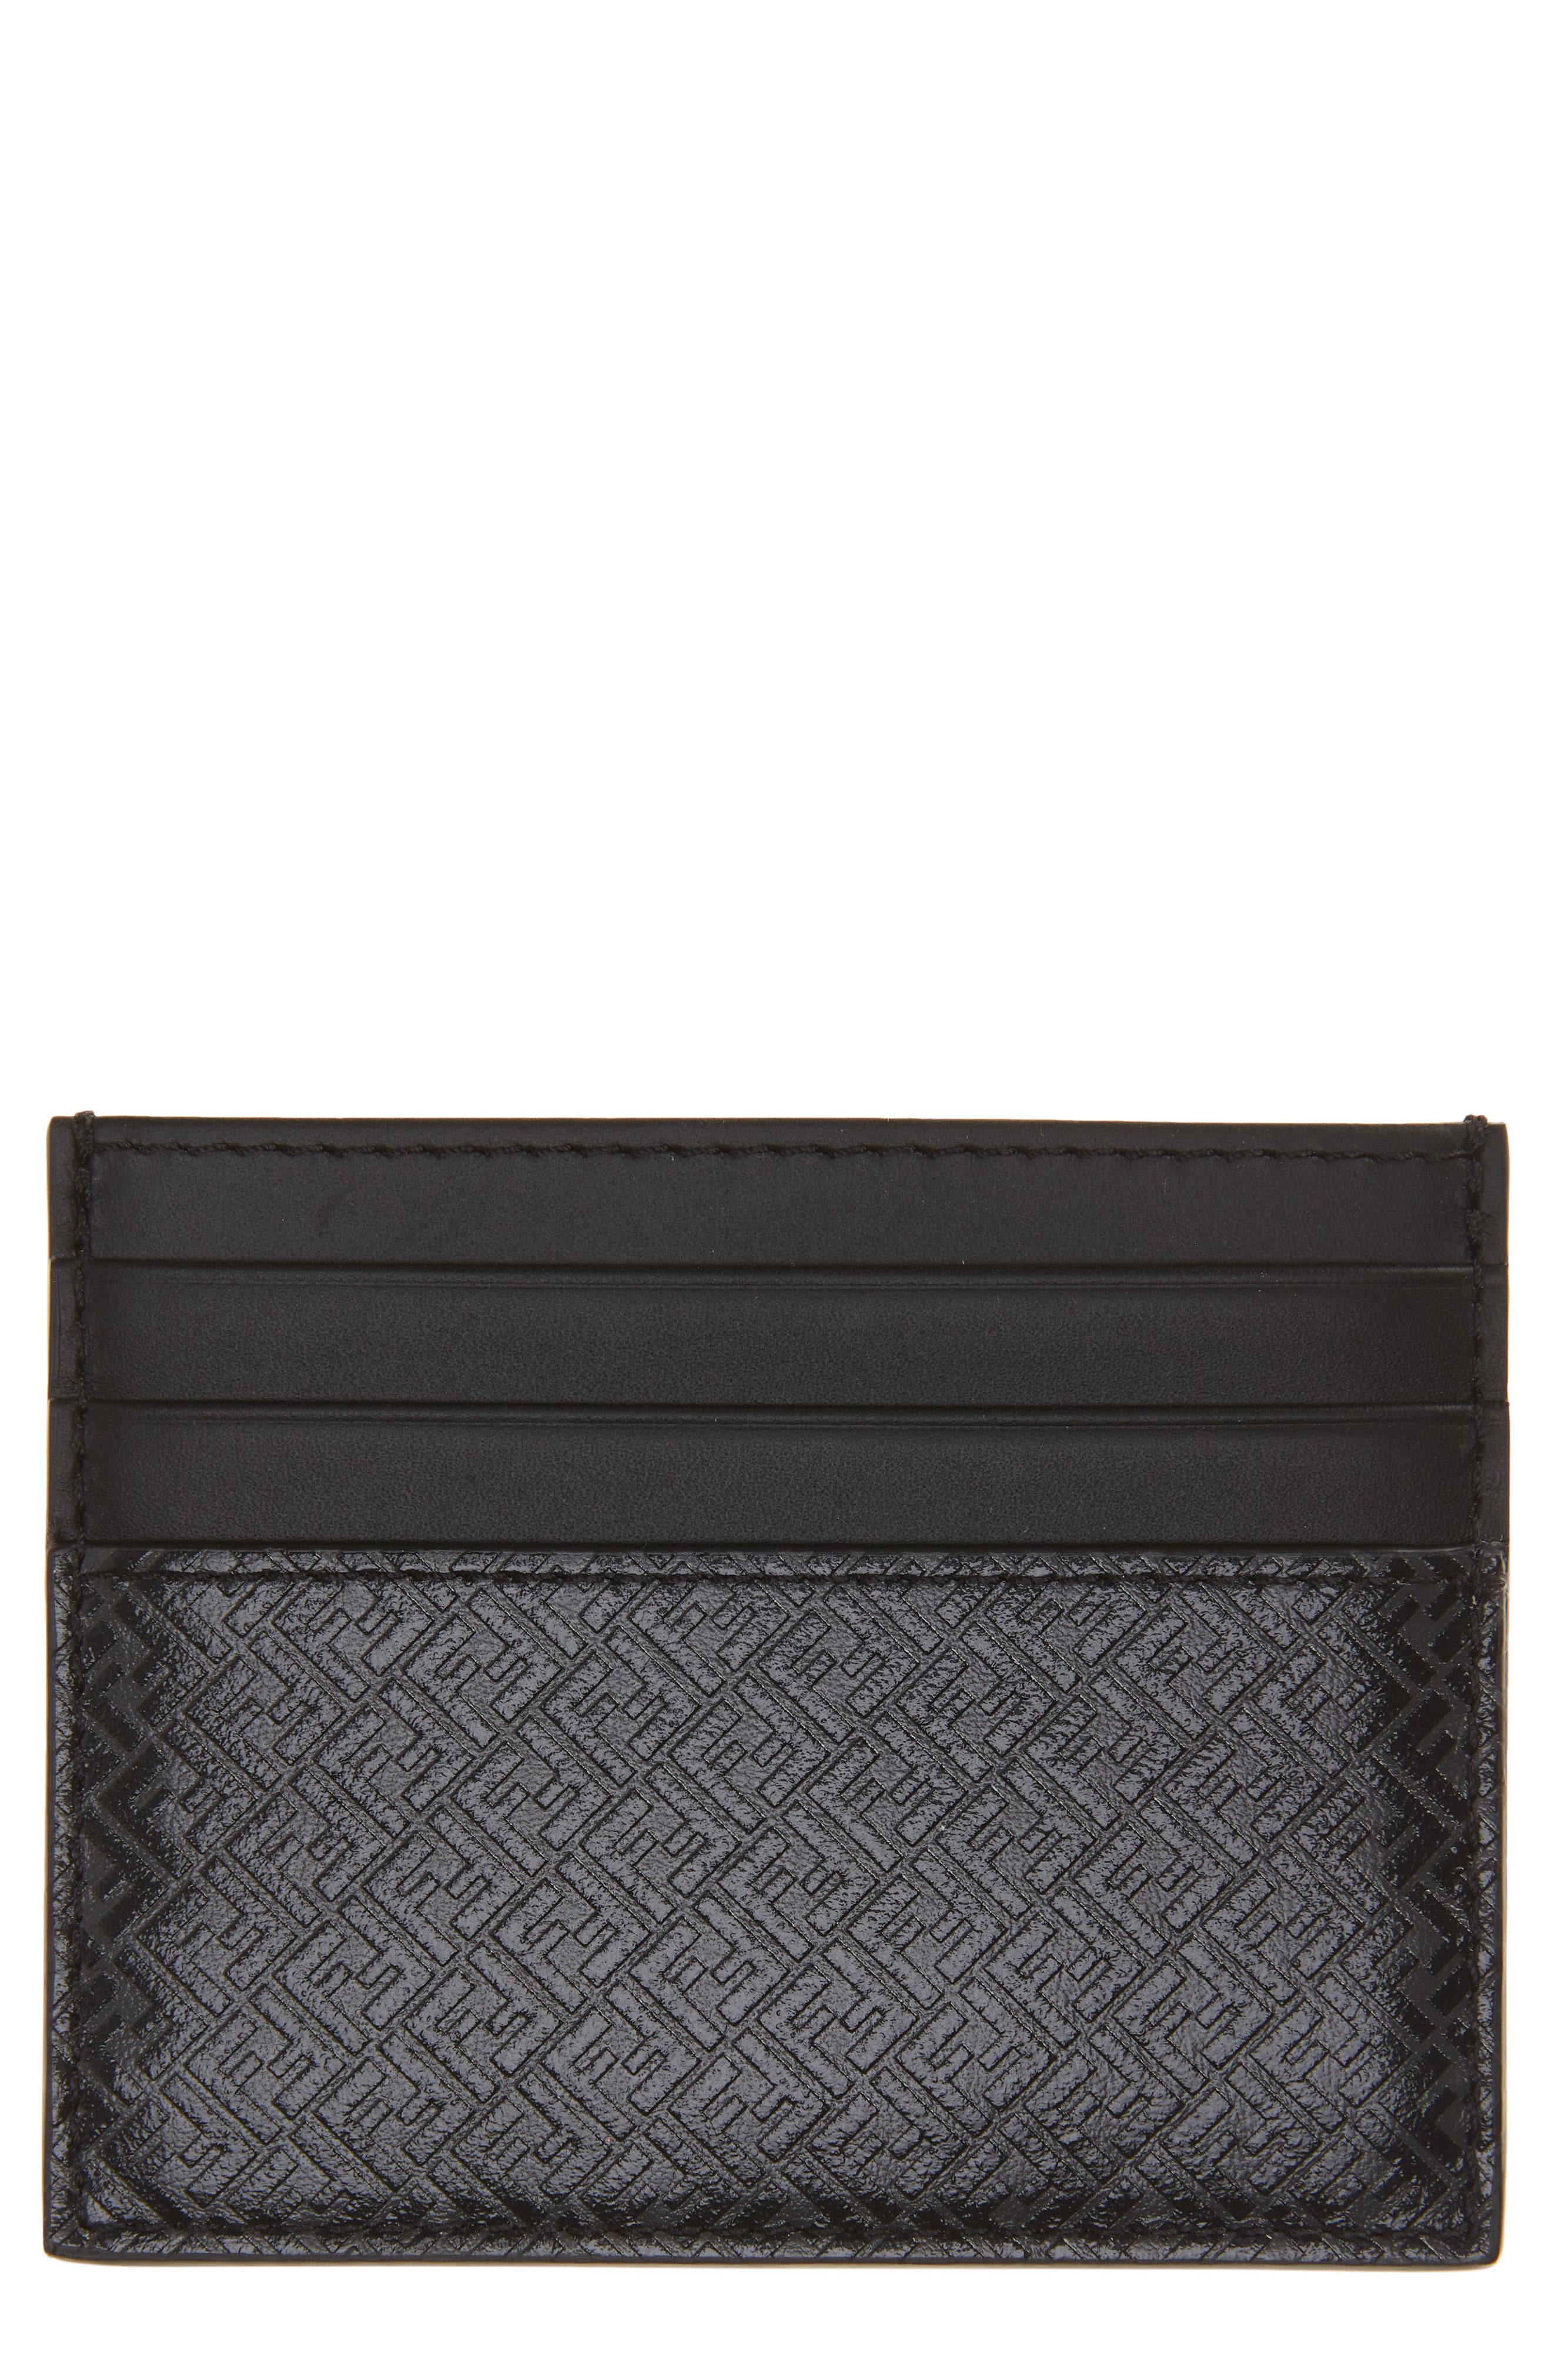 Fendi FF Logo Leather Card Case in Asphalt Black Palladium at Nordstrom